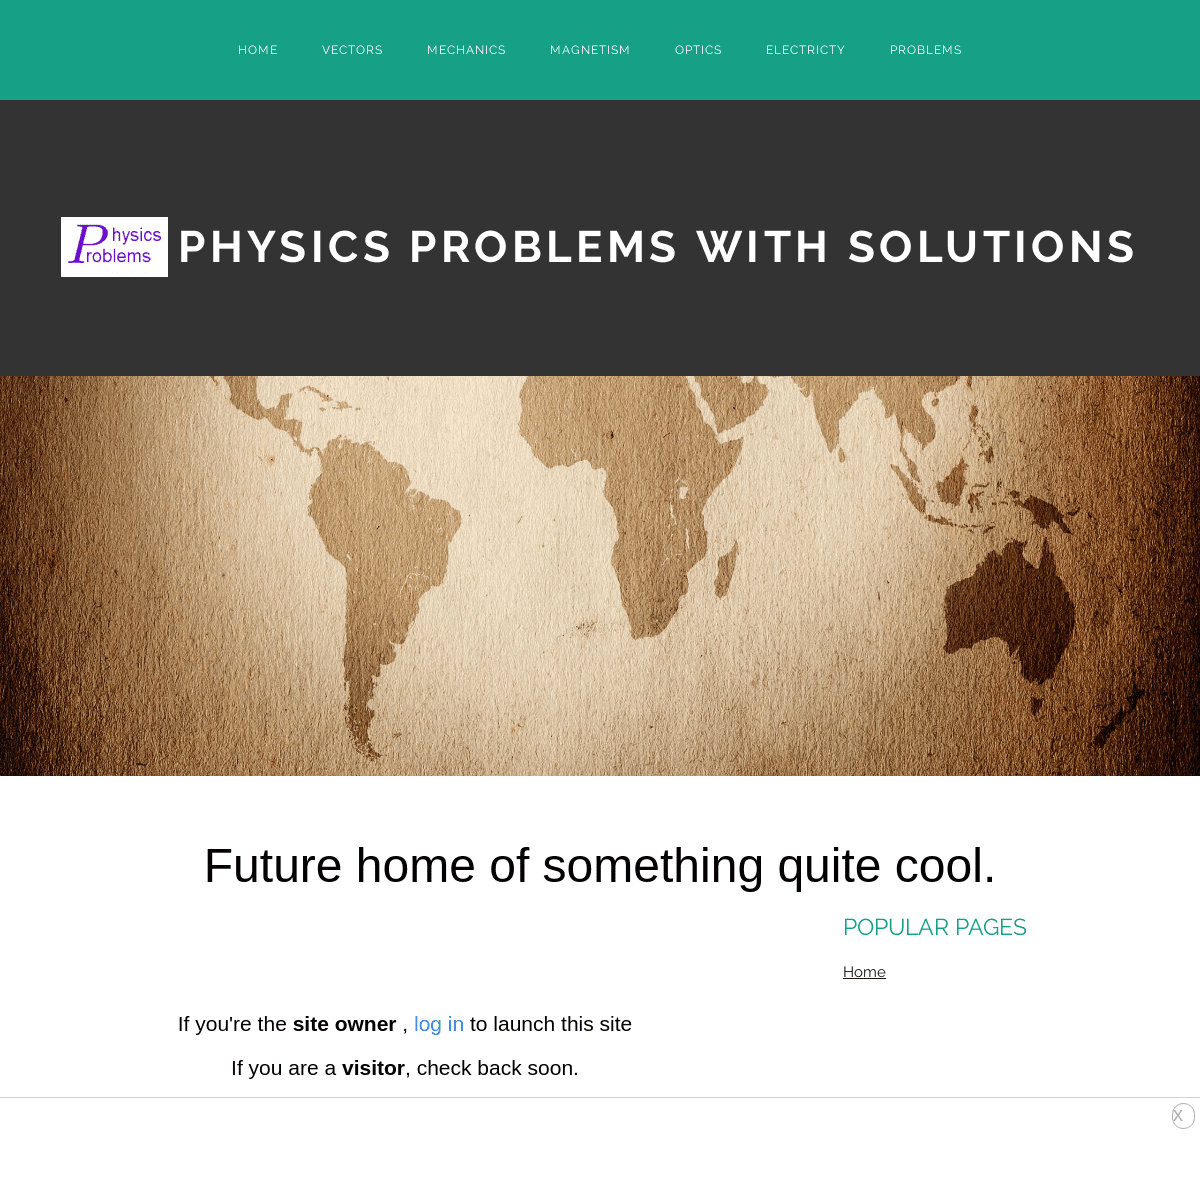 A complete backup of problemsphysics.com